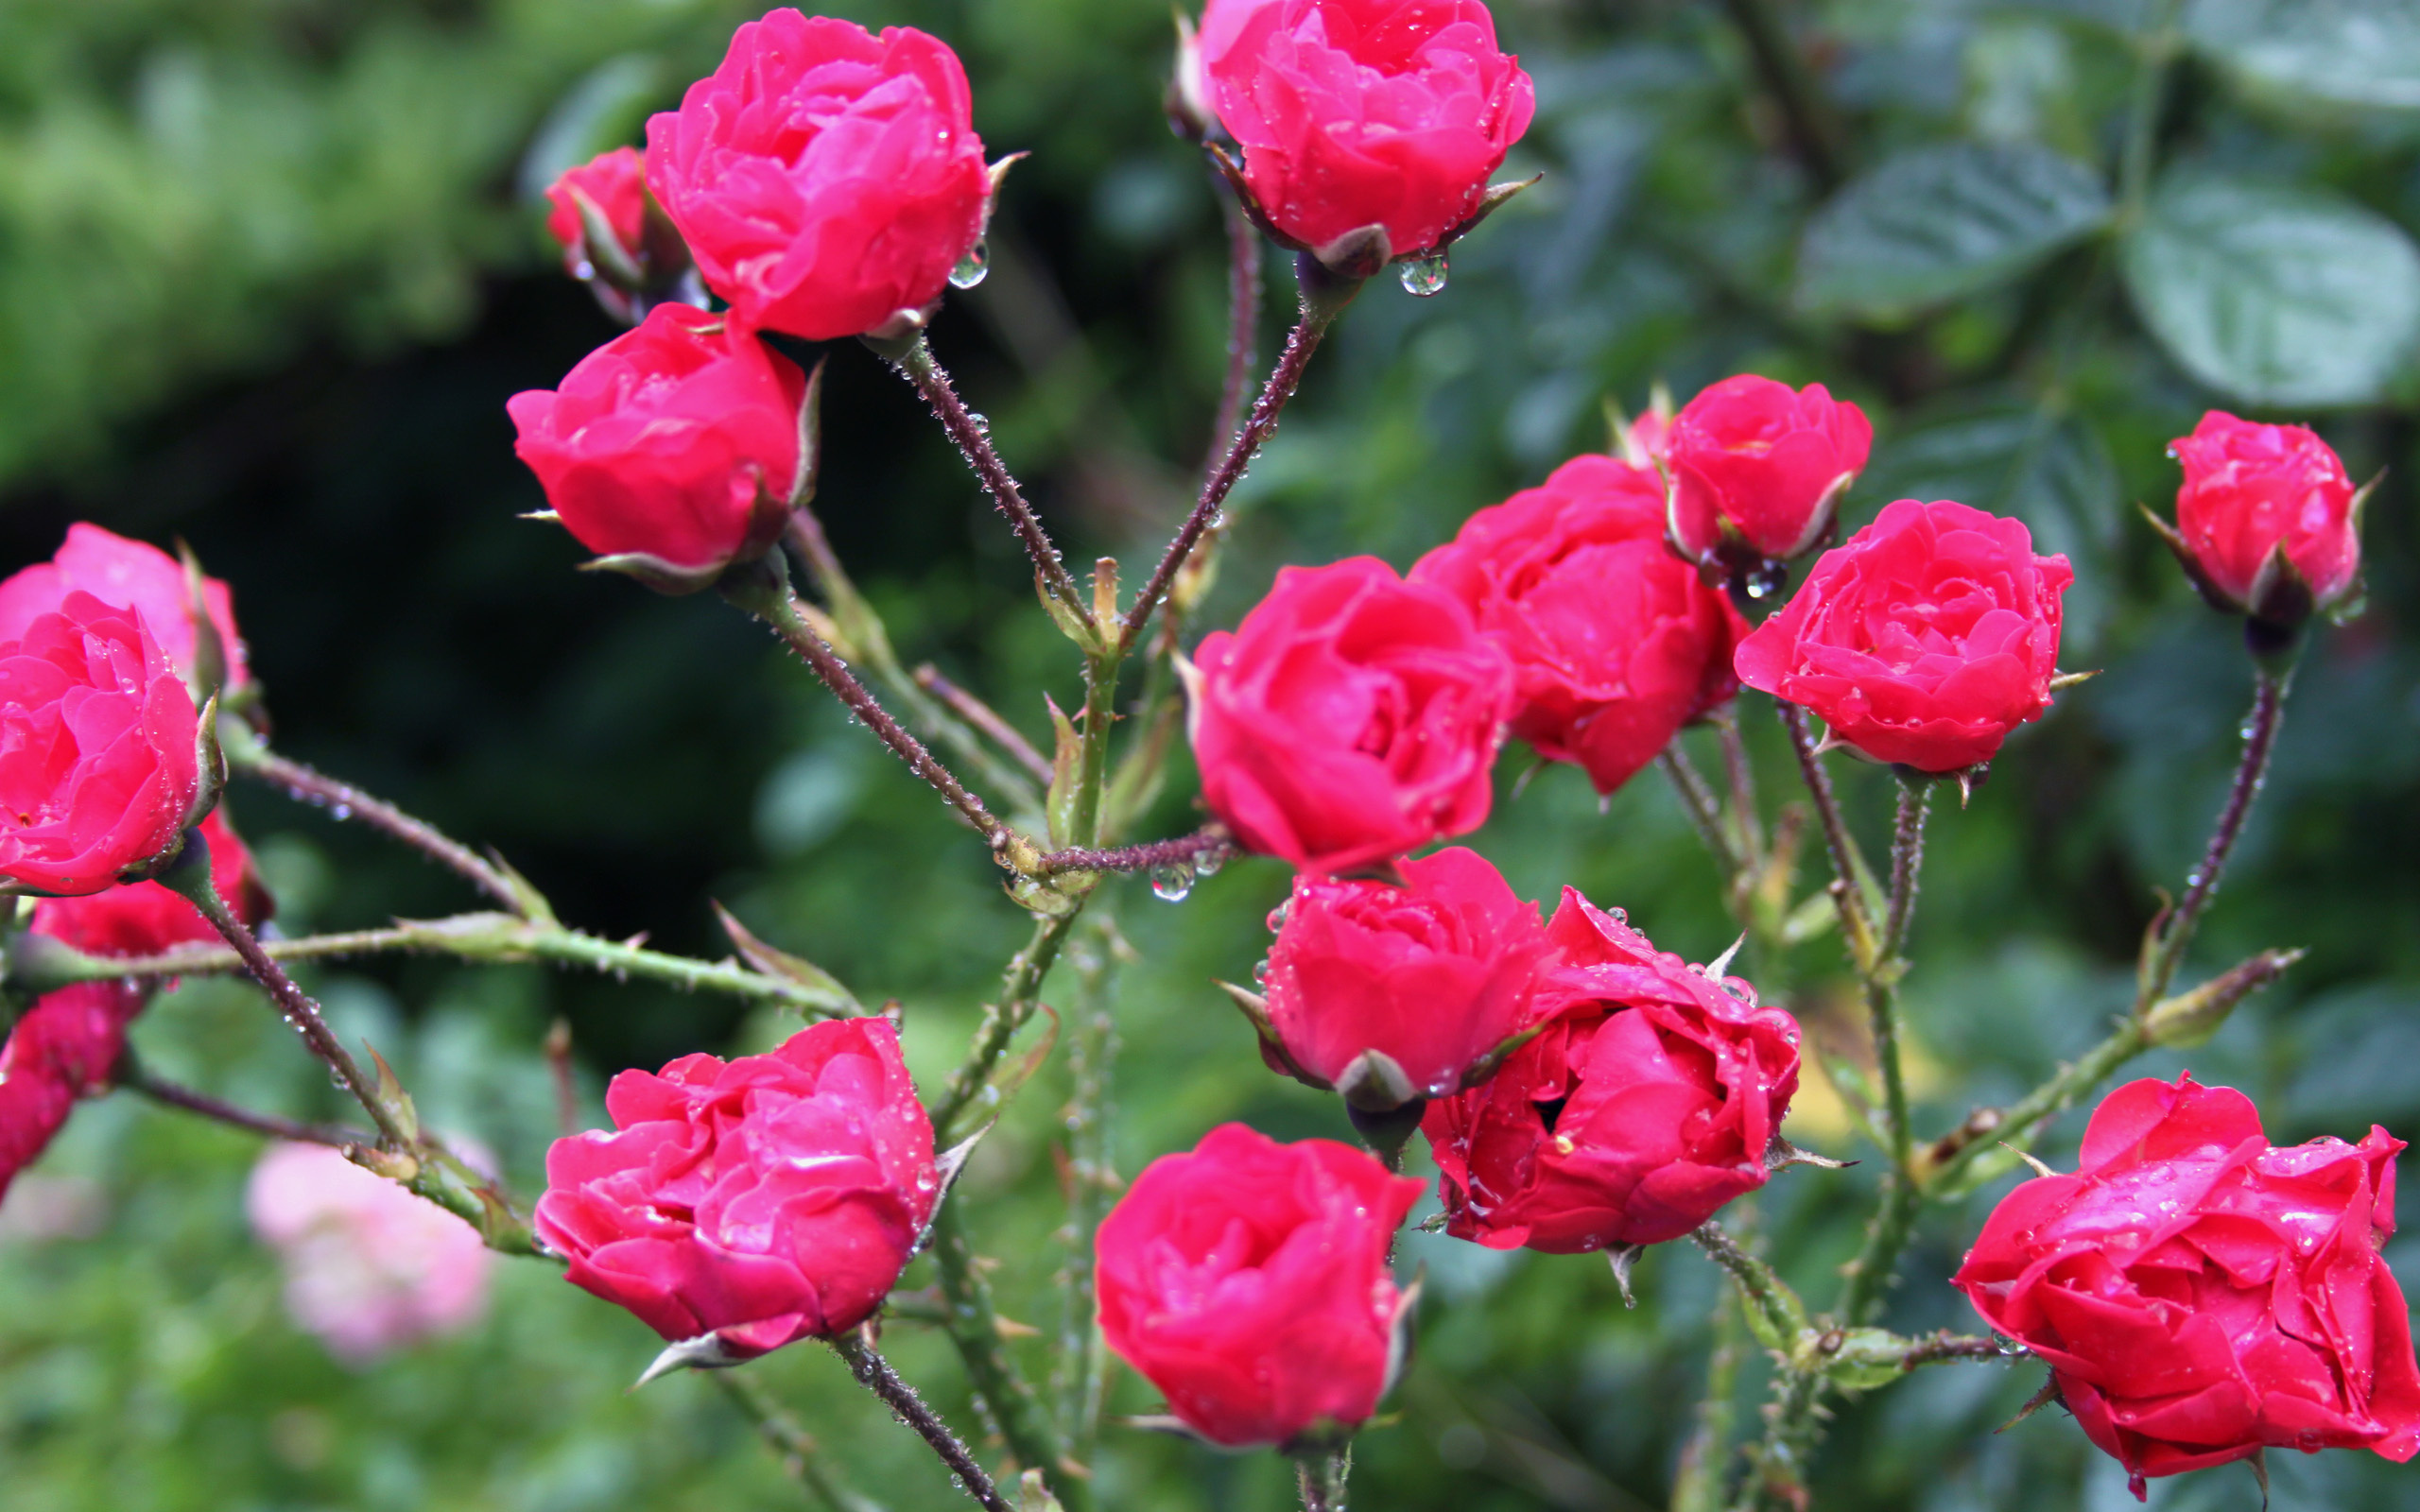 Flower Red Rose 2560x1600